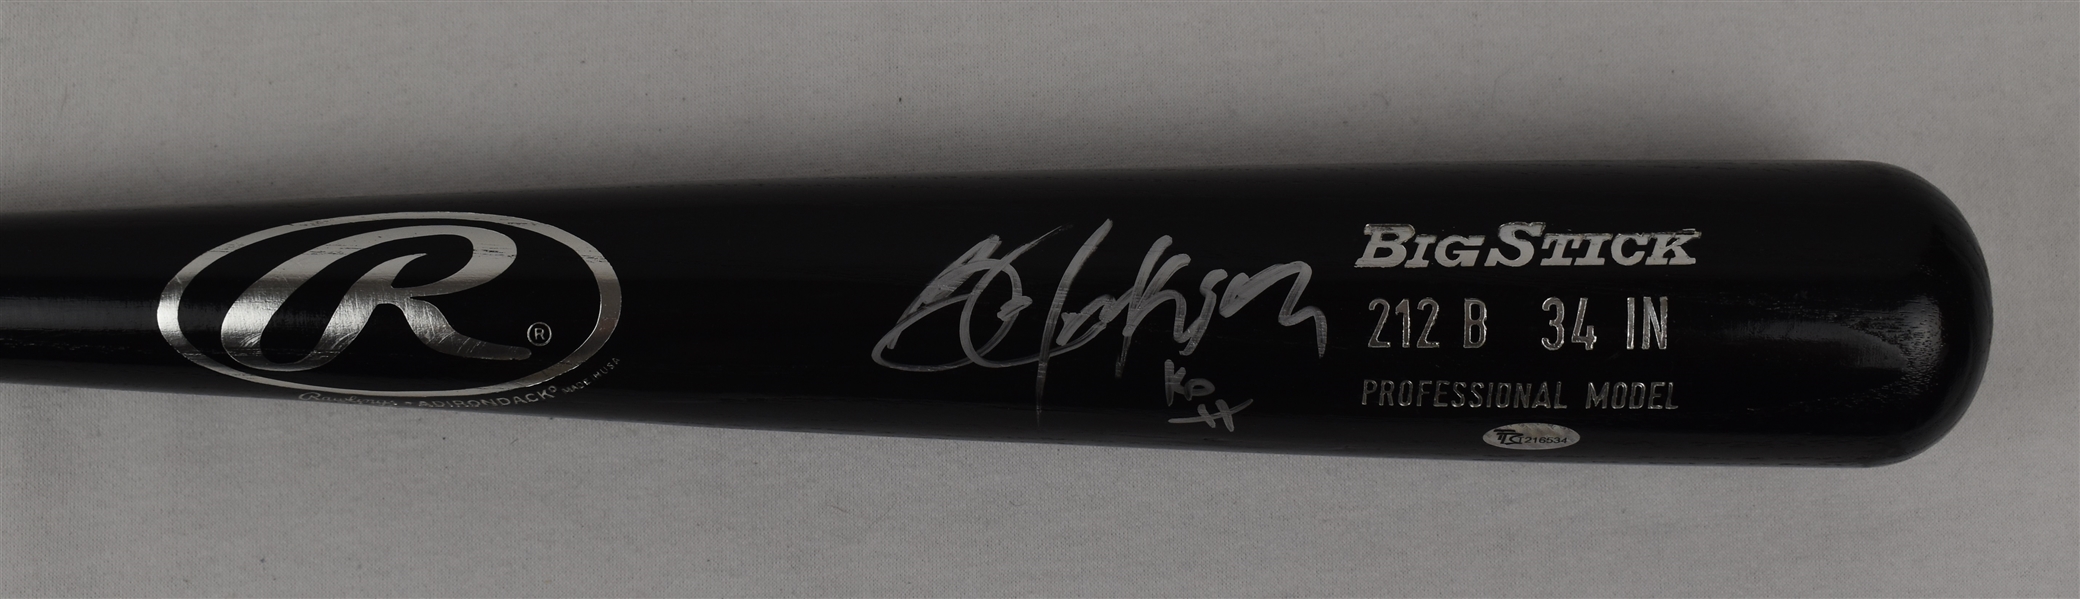 Bo Jackson Autographed Big Stick Bat